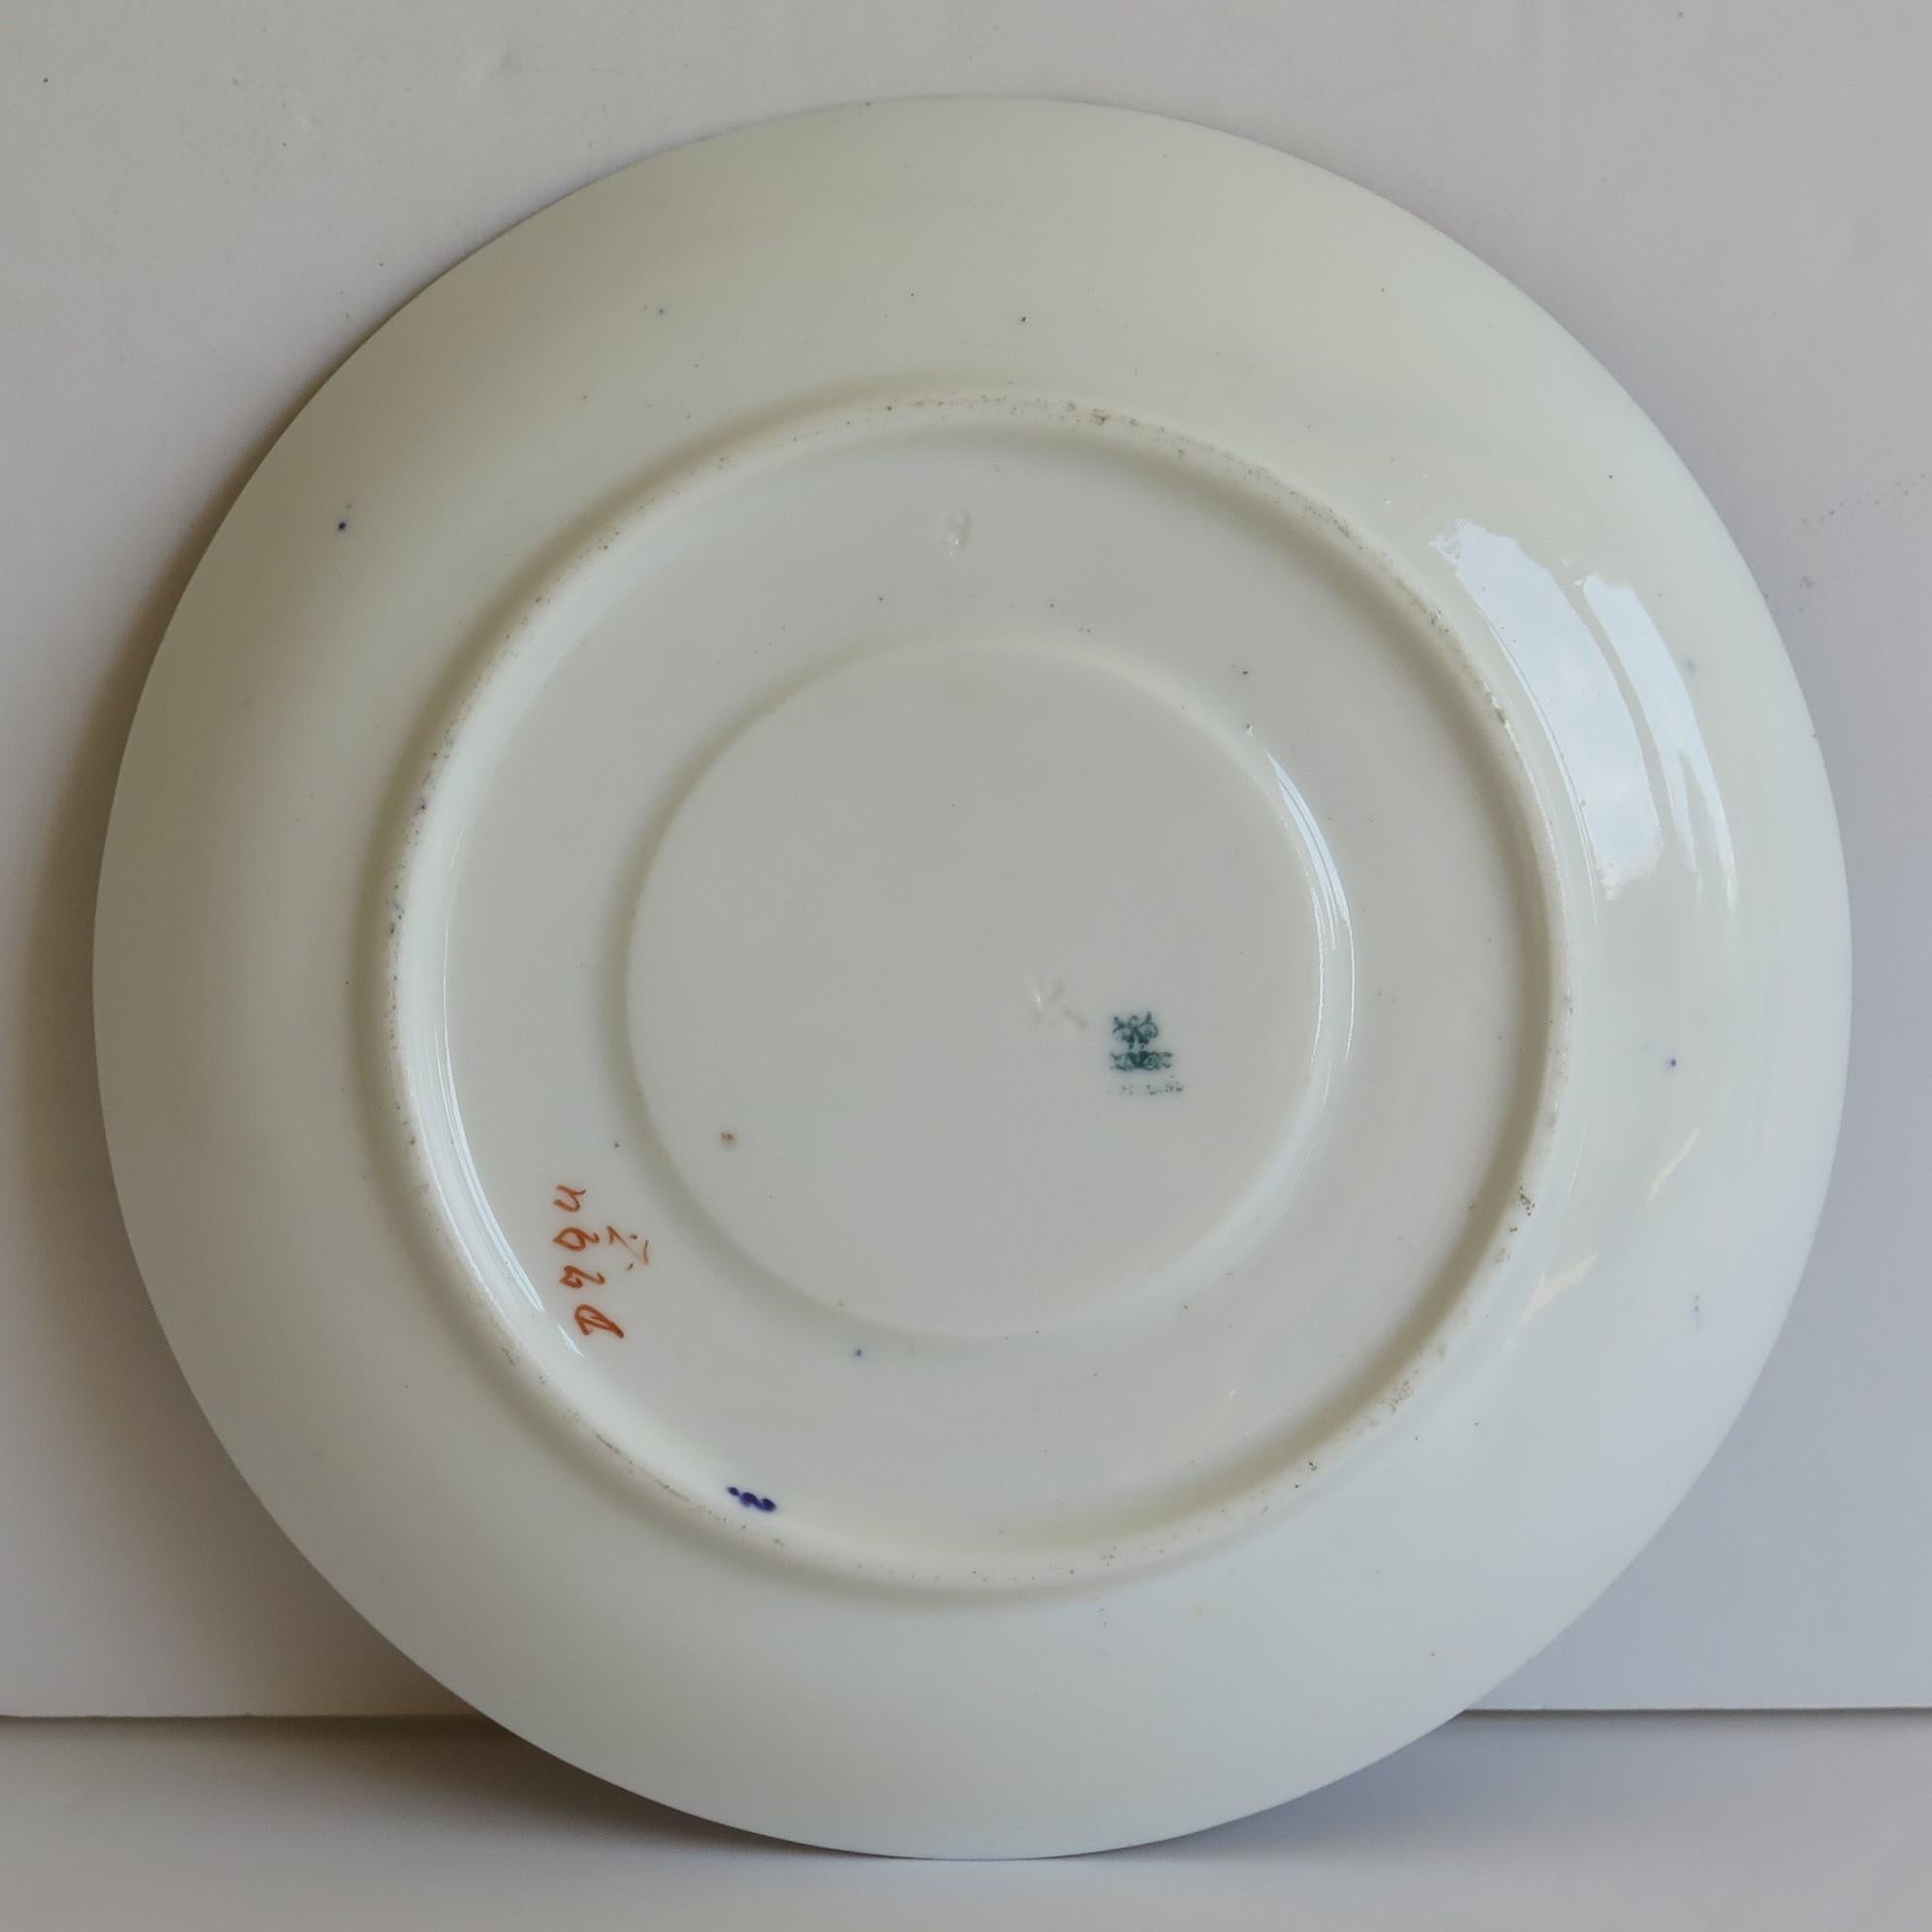 Porcelain Saucer Dish by Copeland 'Spode' in Imari Fence Ptn No. 794, circa 1850 1